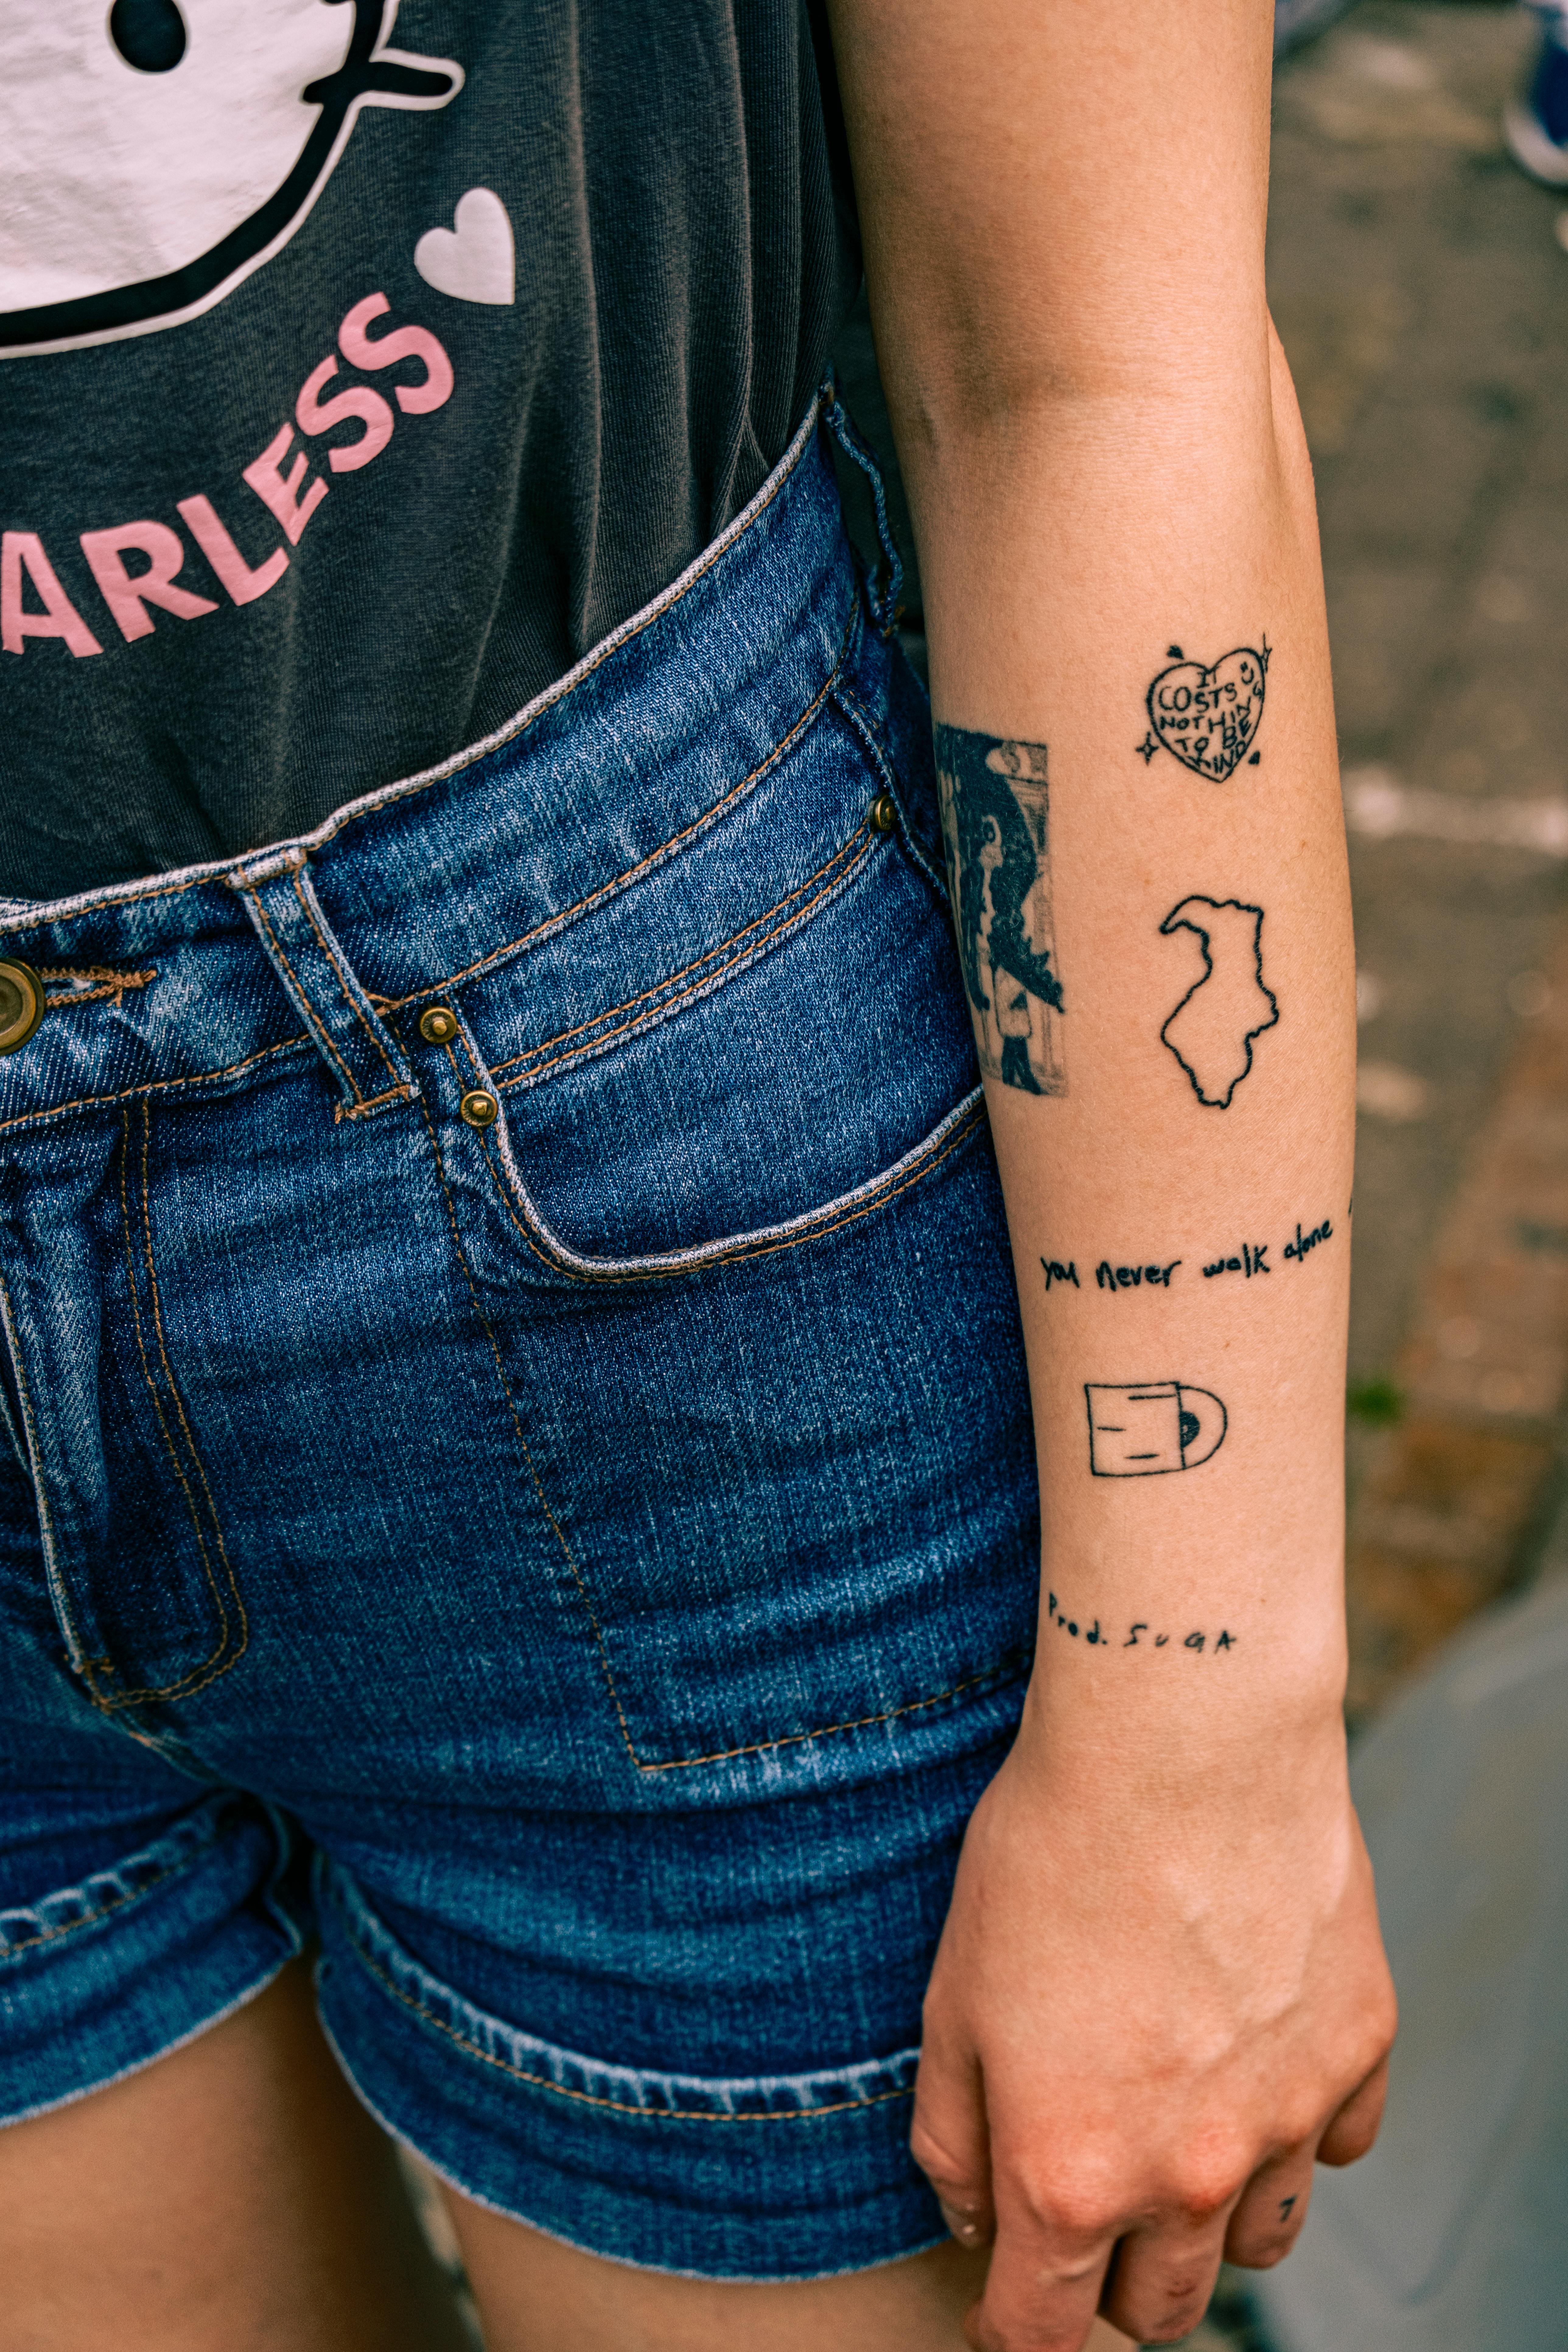 Angel Tattoo Design Meanings and Symbols | CUSTOM TATTOO DESIGN